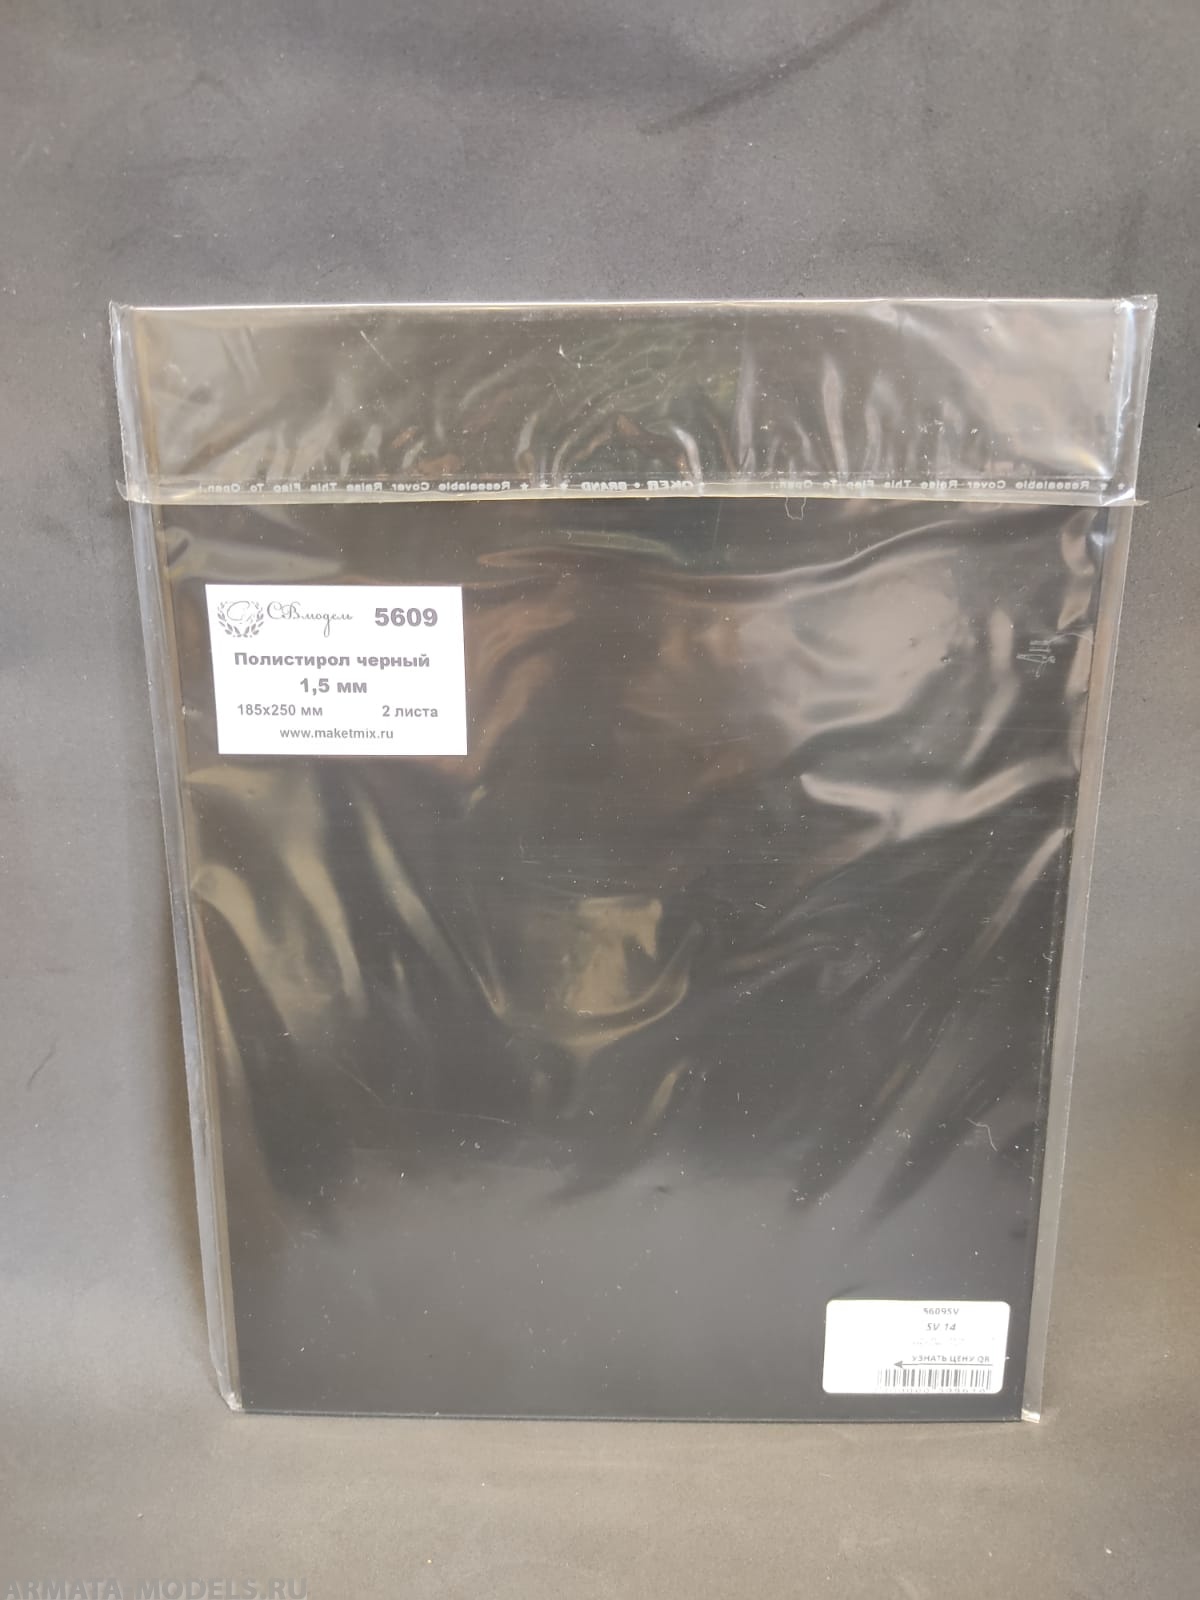 5609 полистирол черный лист 1,5 мм - 185х250 мм - 2 шт